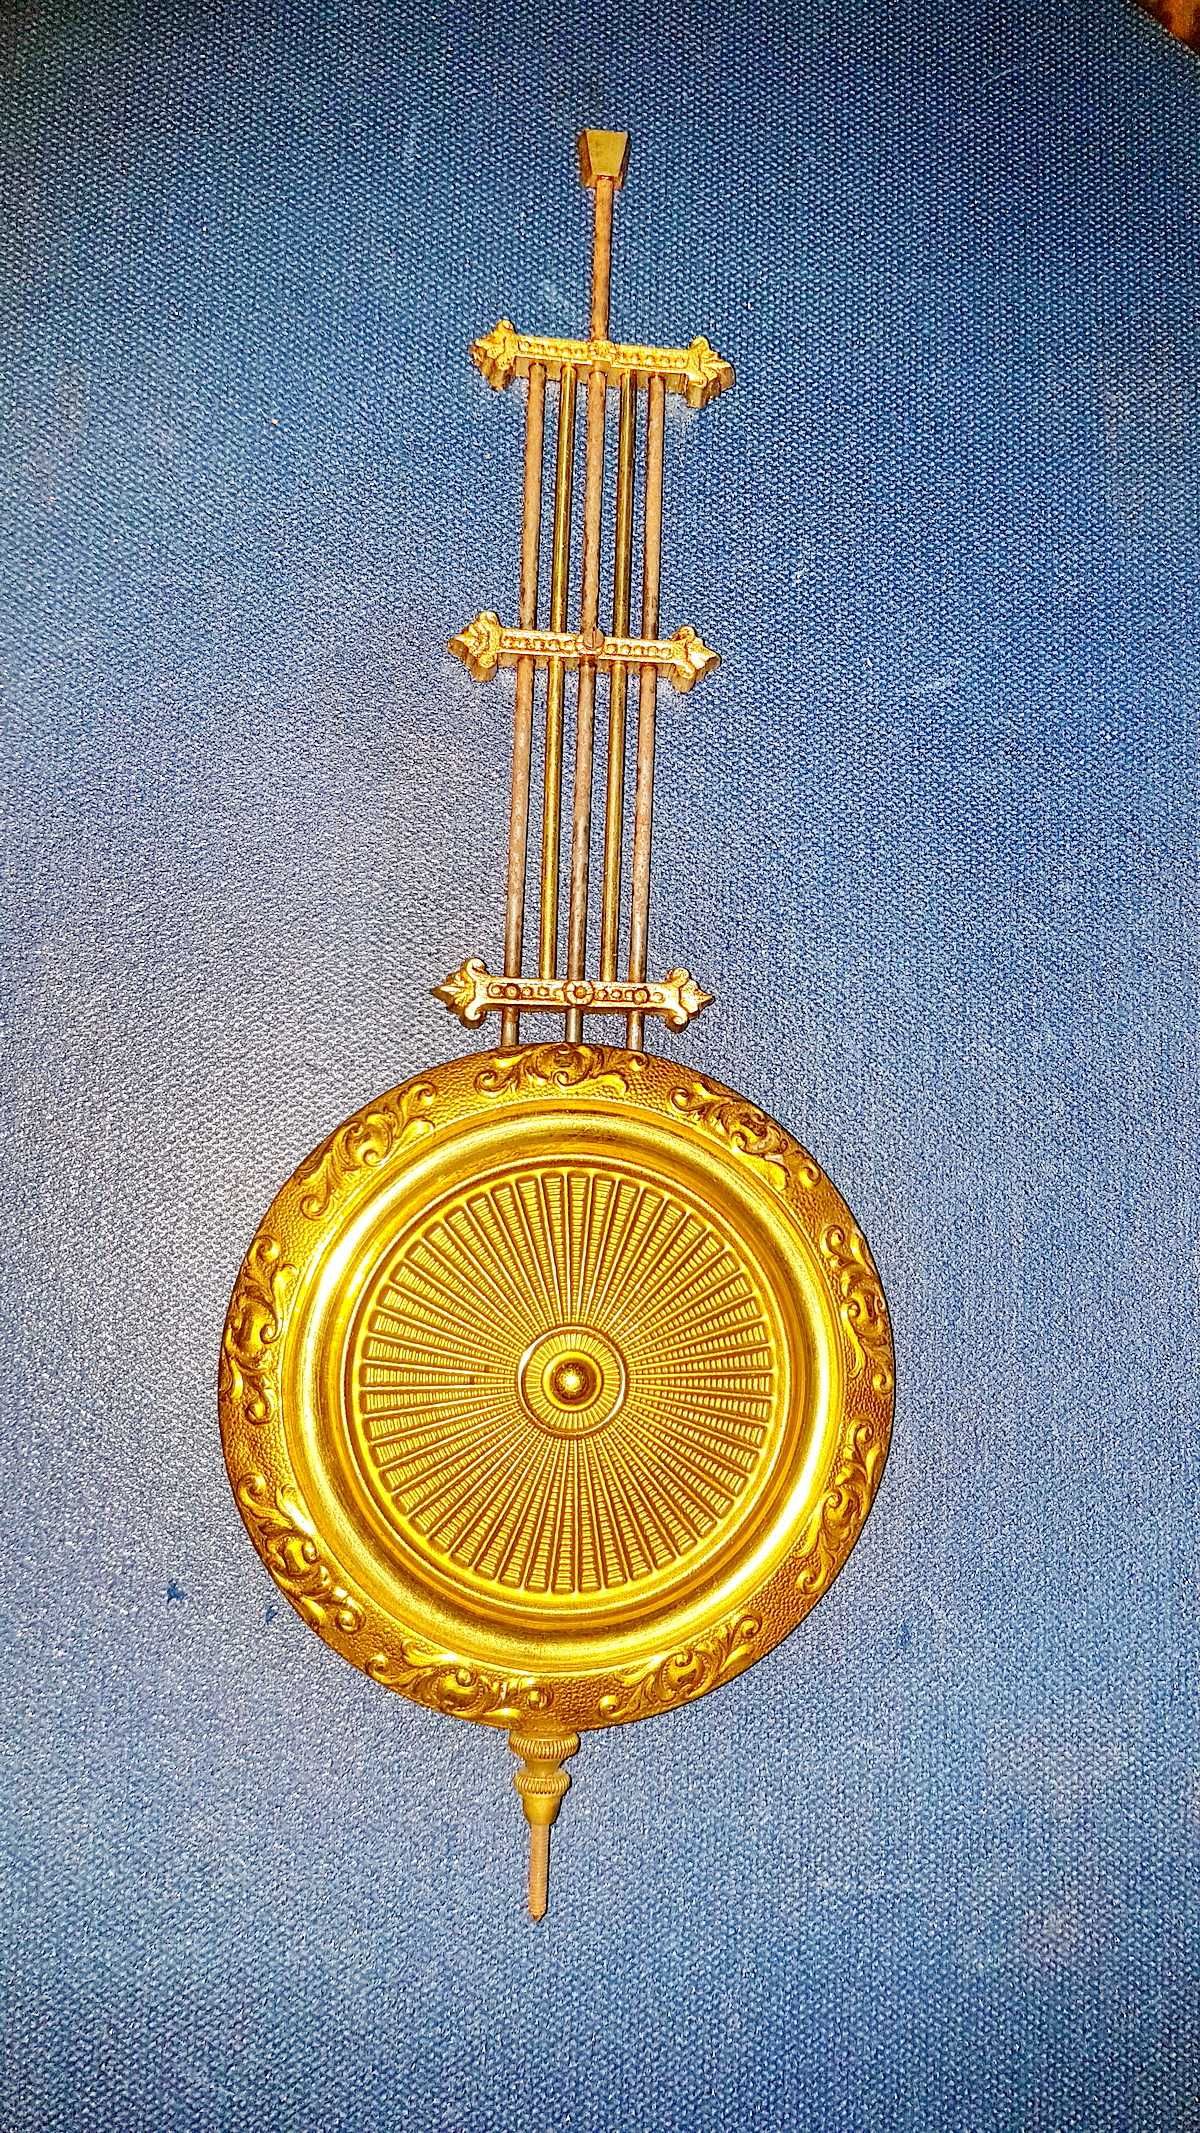 C938-Limba penteru ceas anii 1900 bronz aurit.